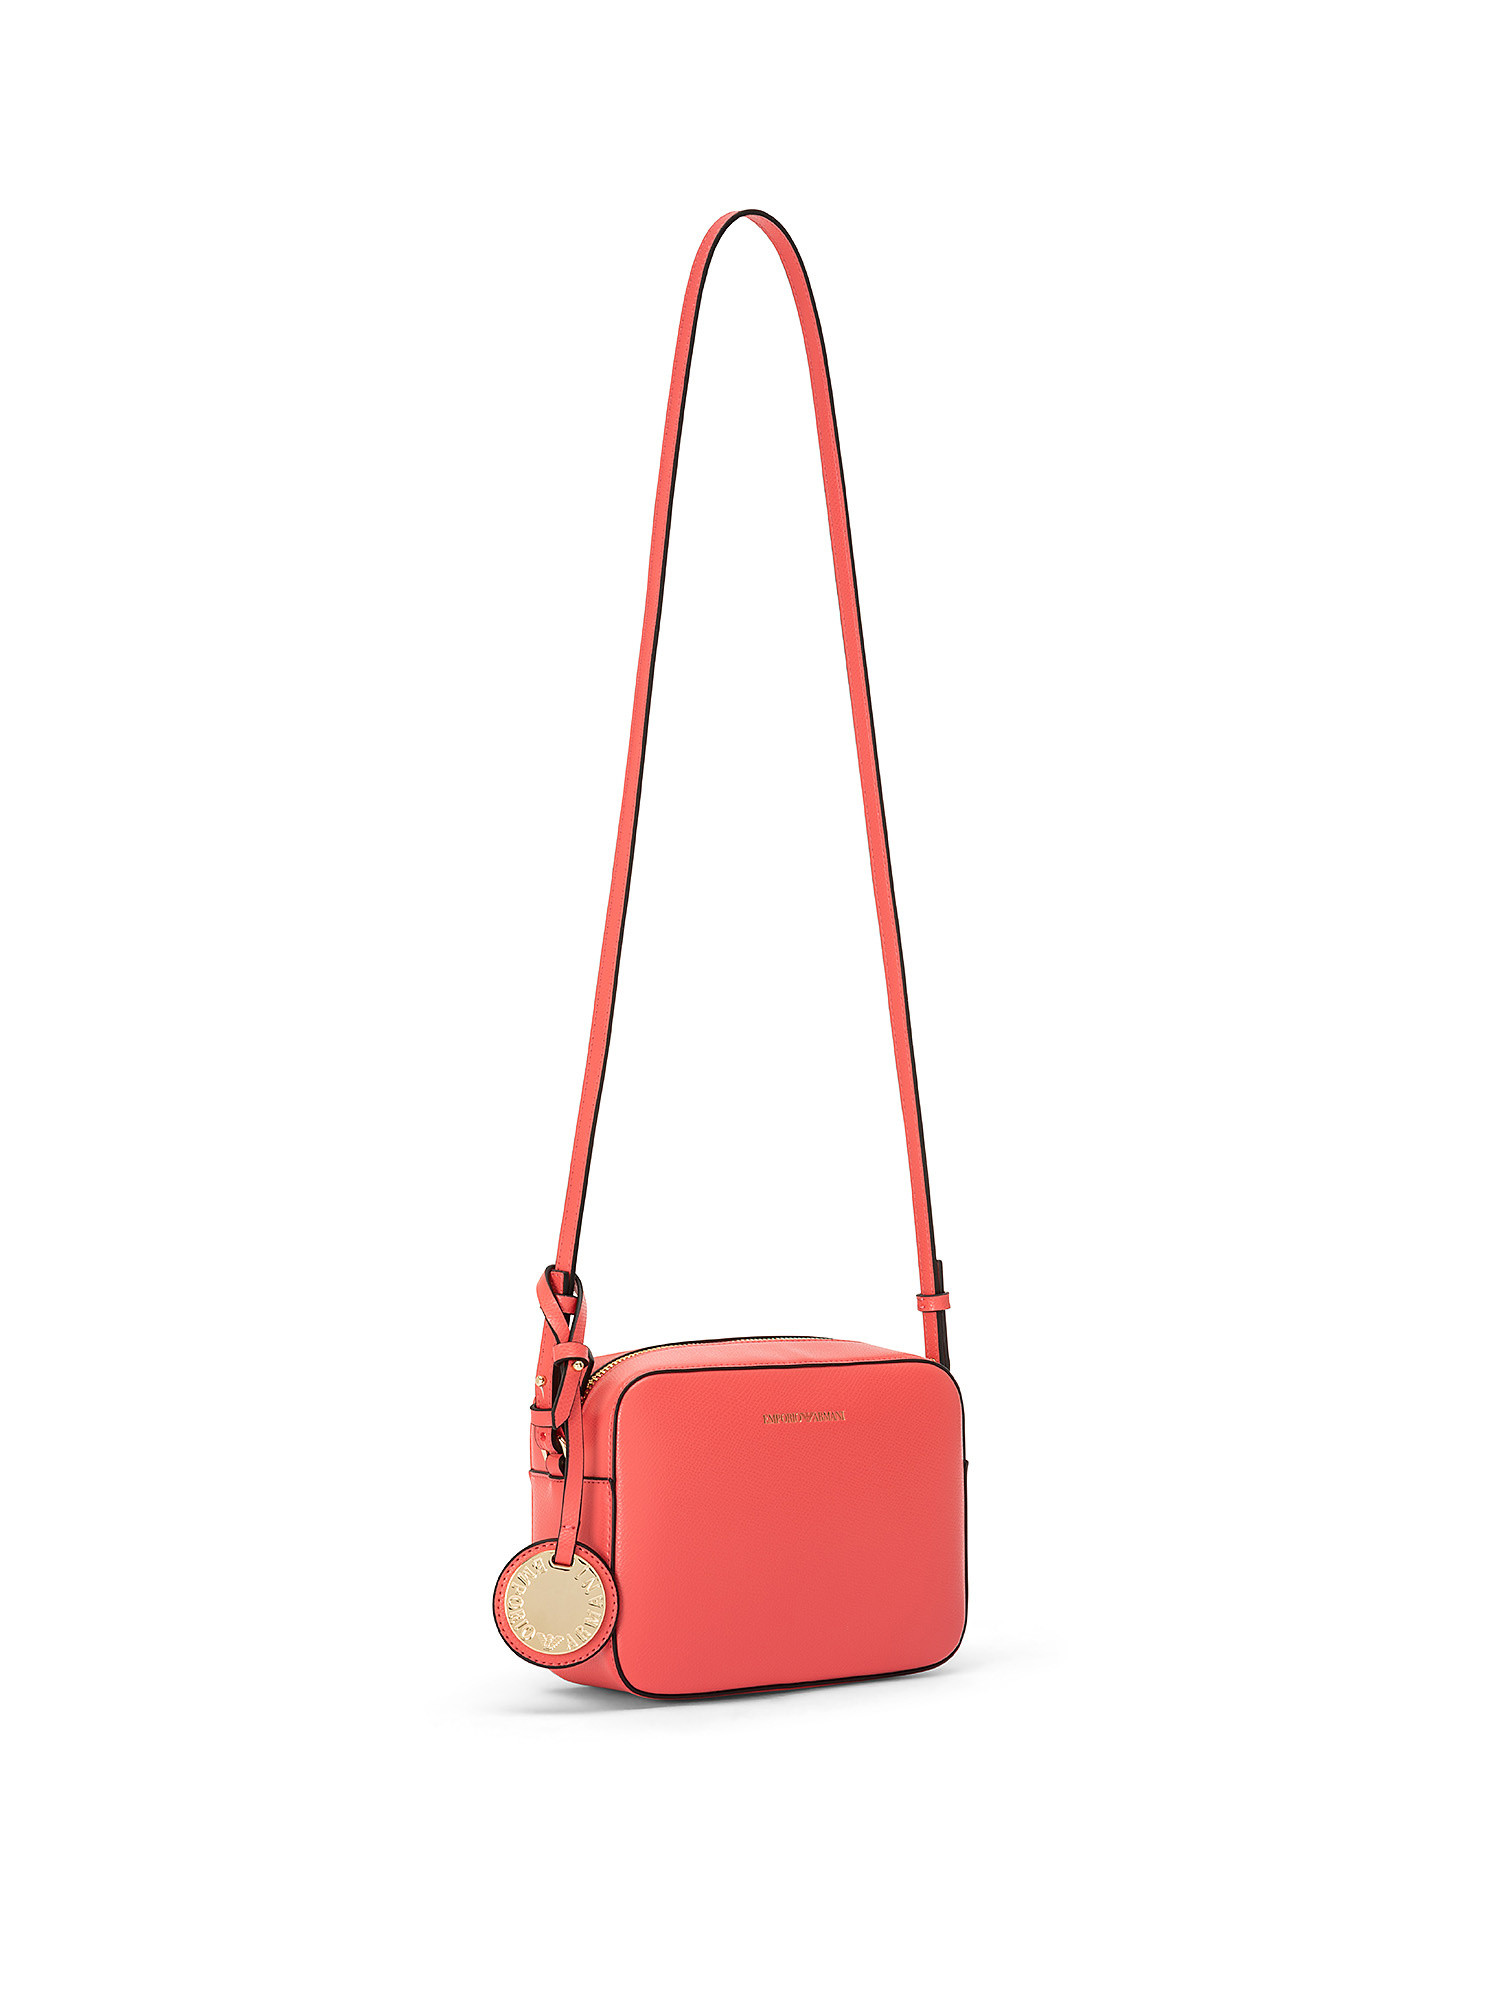 Mini bag, Coral Red, large image number 1